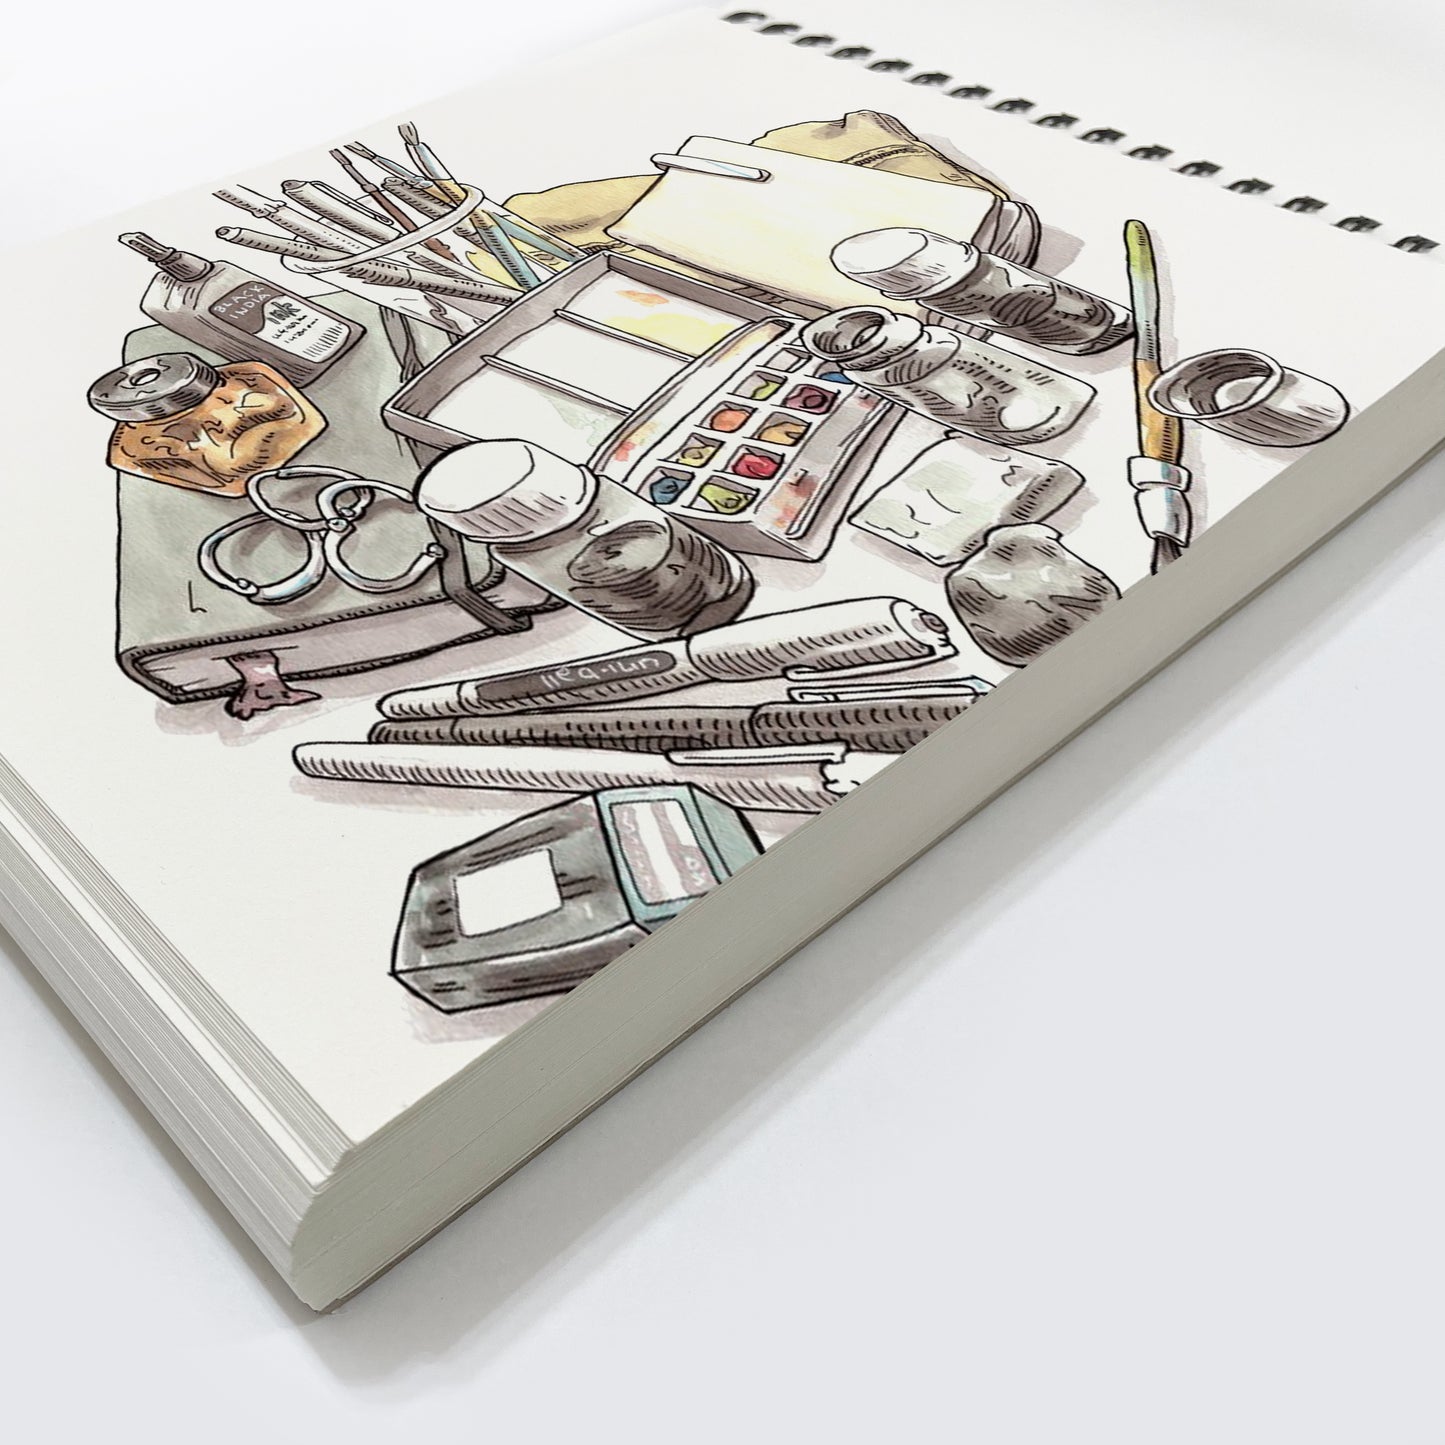  arts and crafts for kids, Robust 400 series Sketchbook